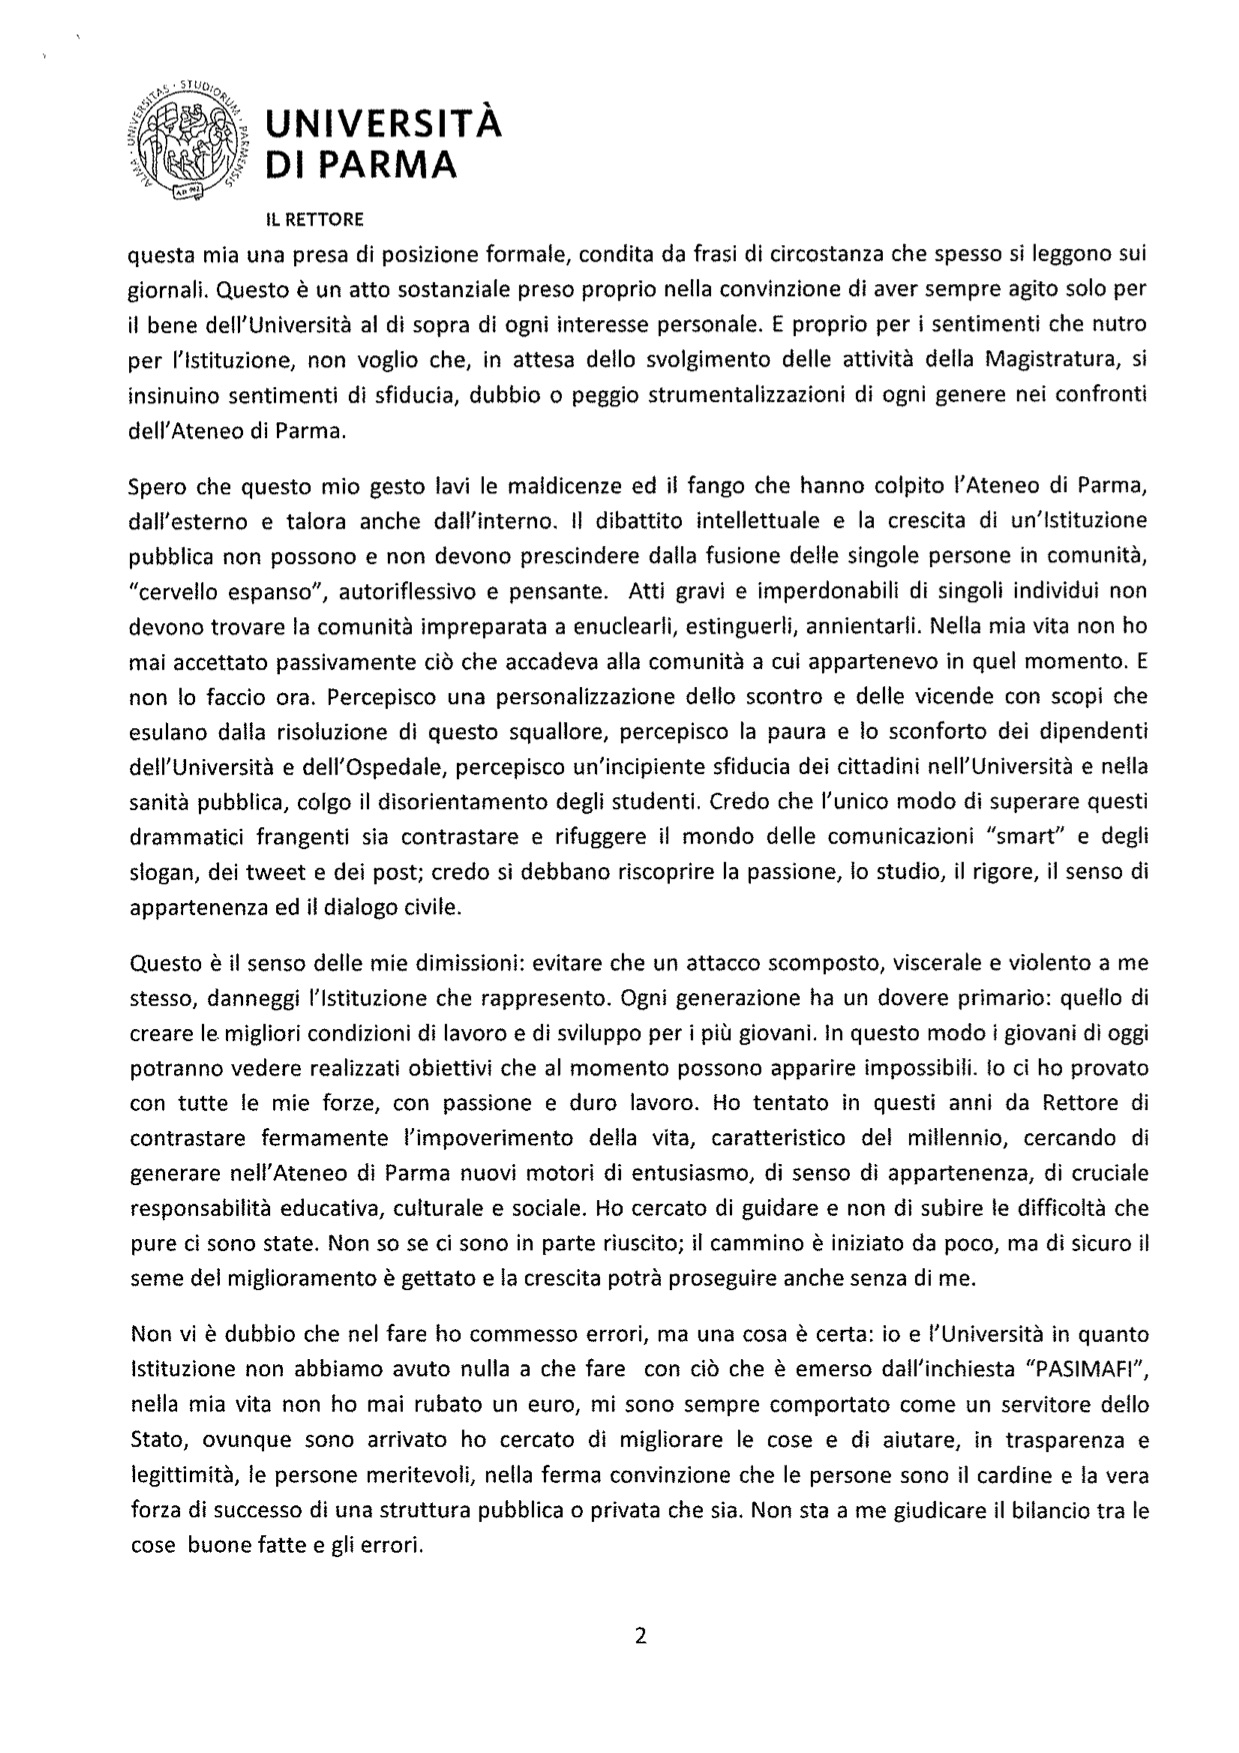 Dimissioni-Rettore-LorisBorghi-Parma-Universita.jpg